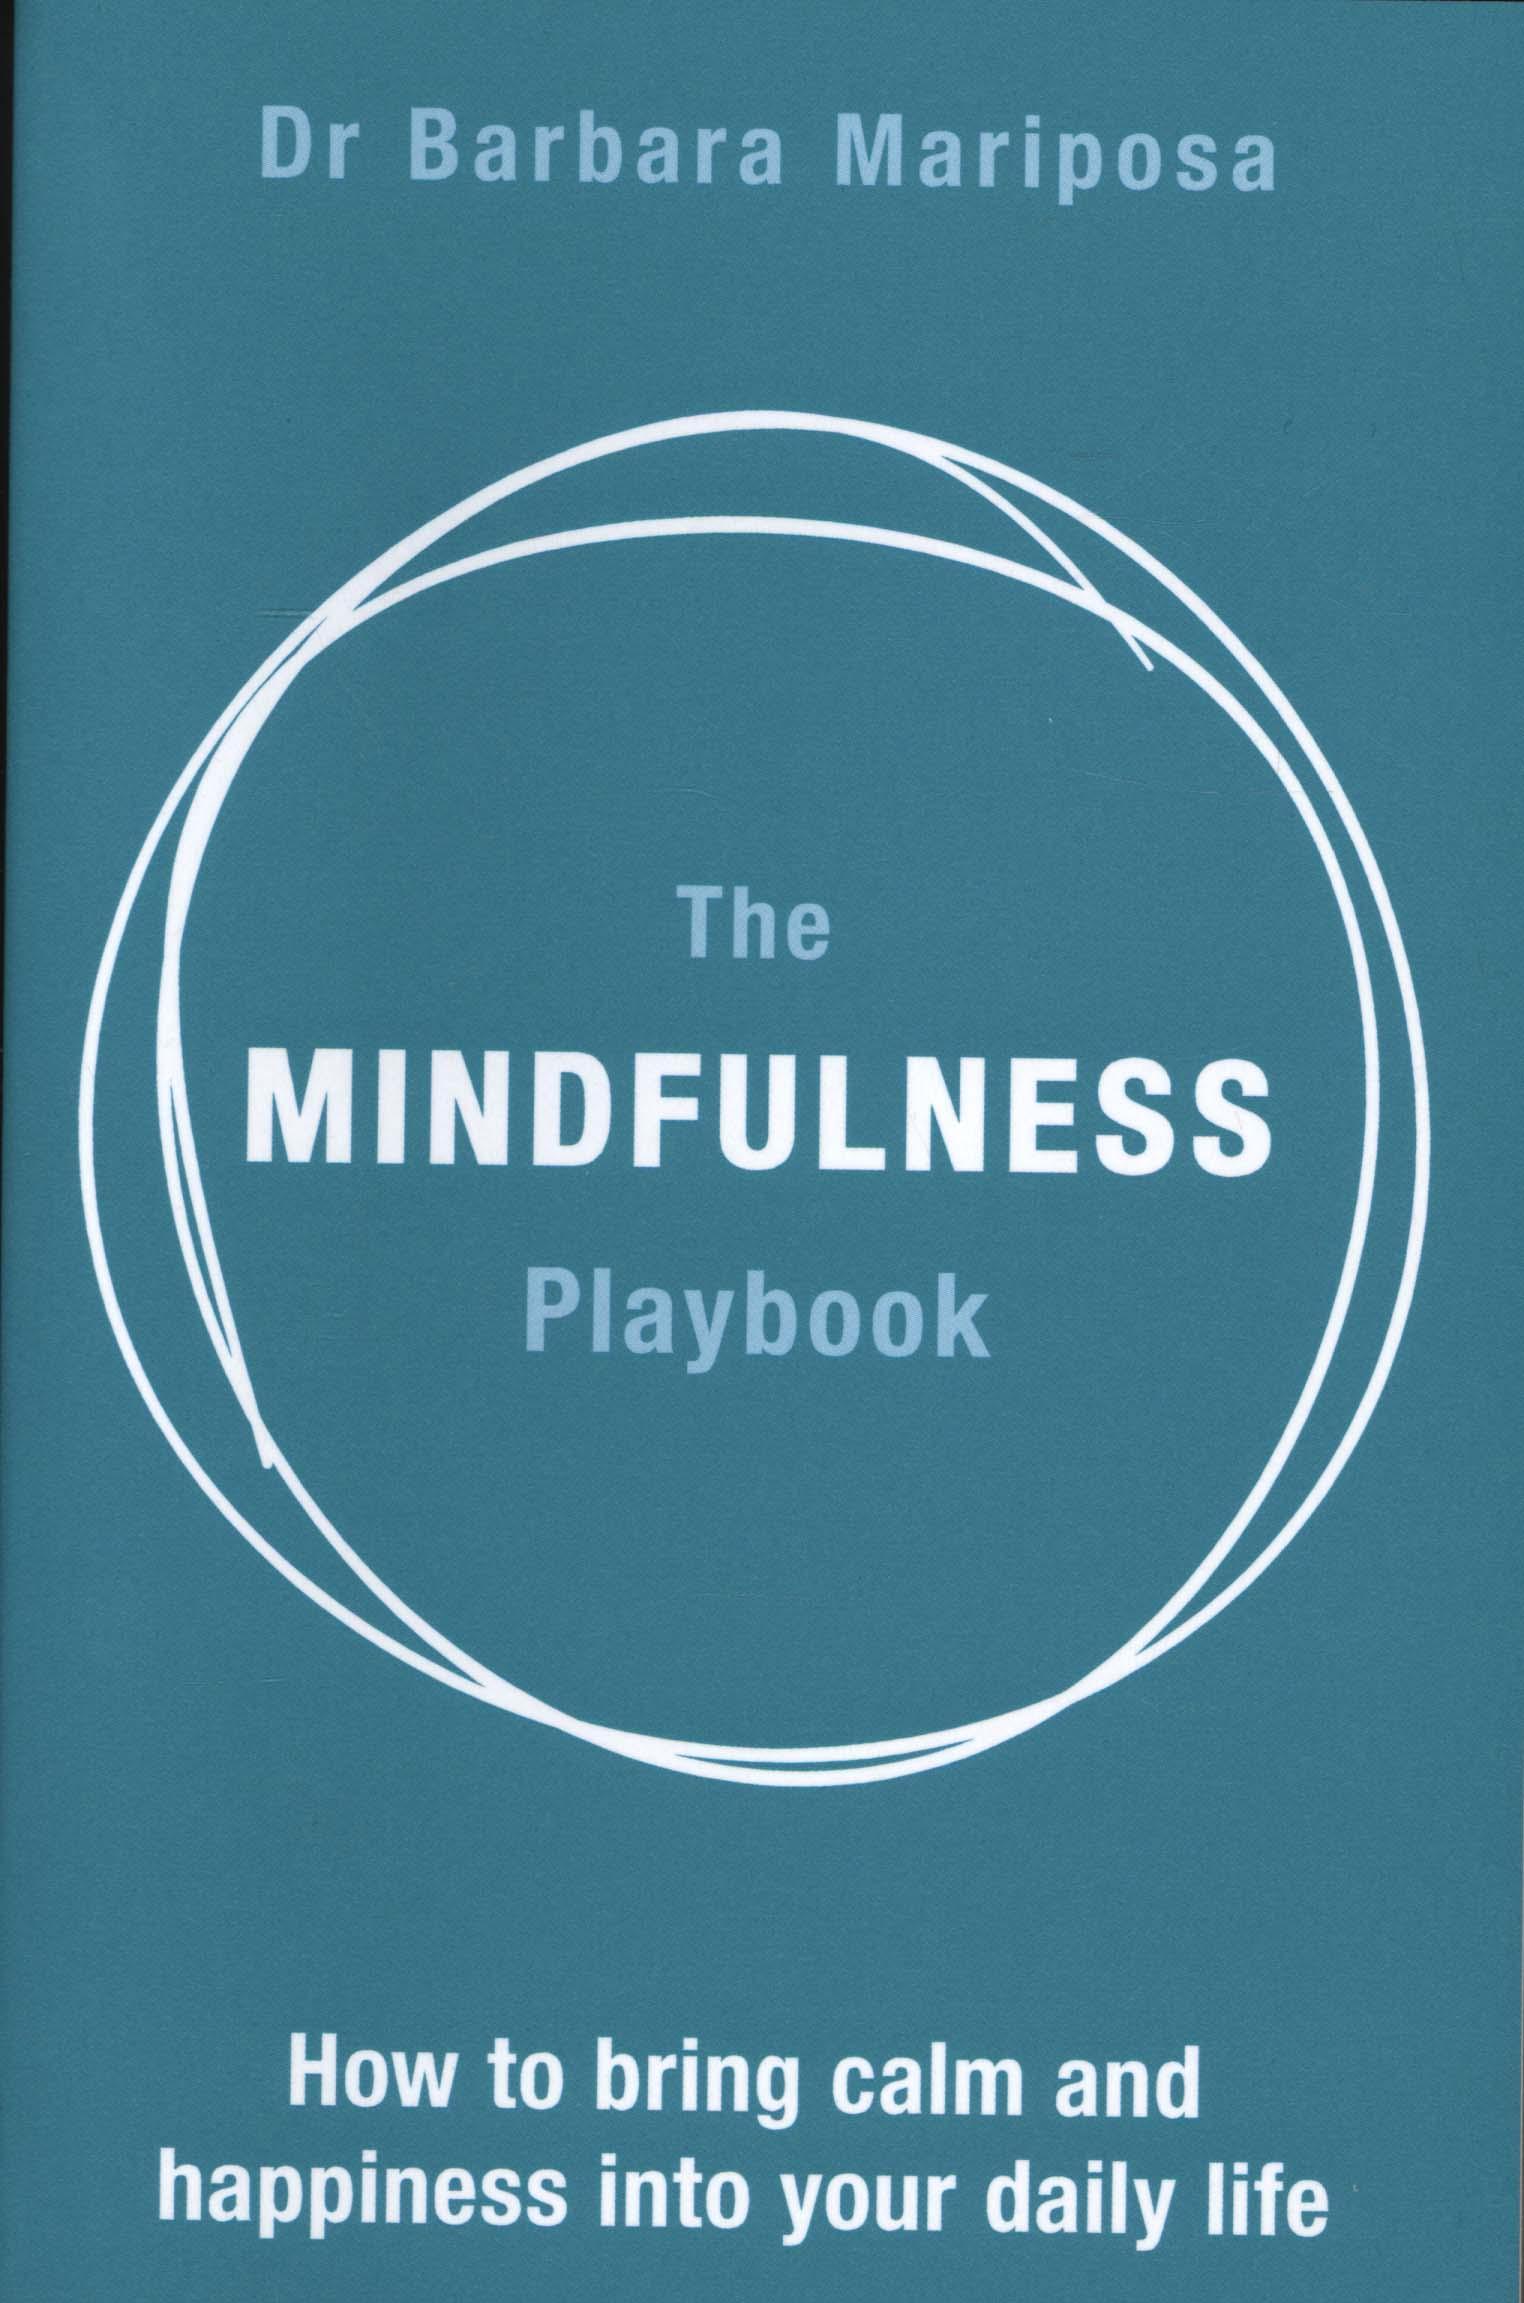 Mindfulness Playbook